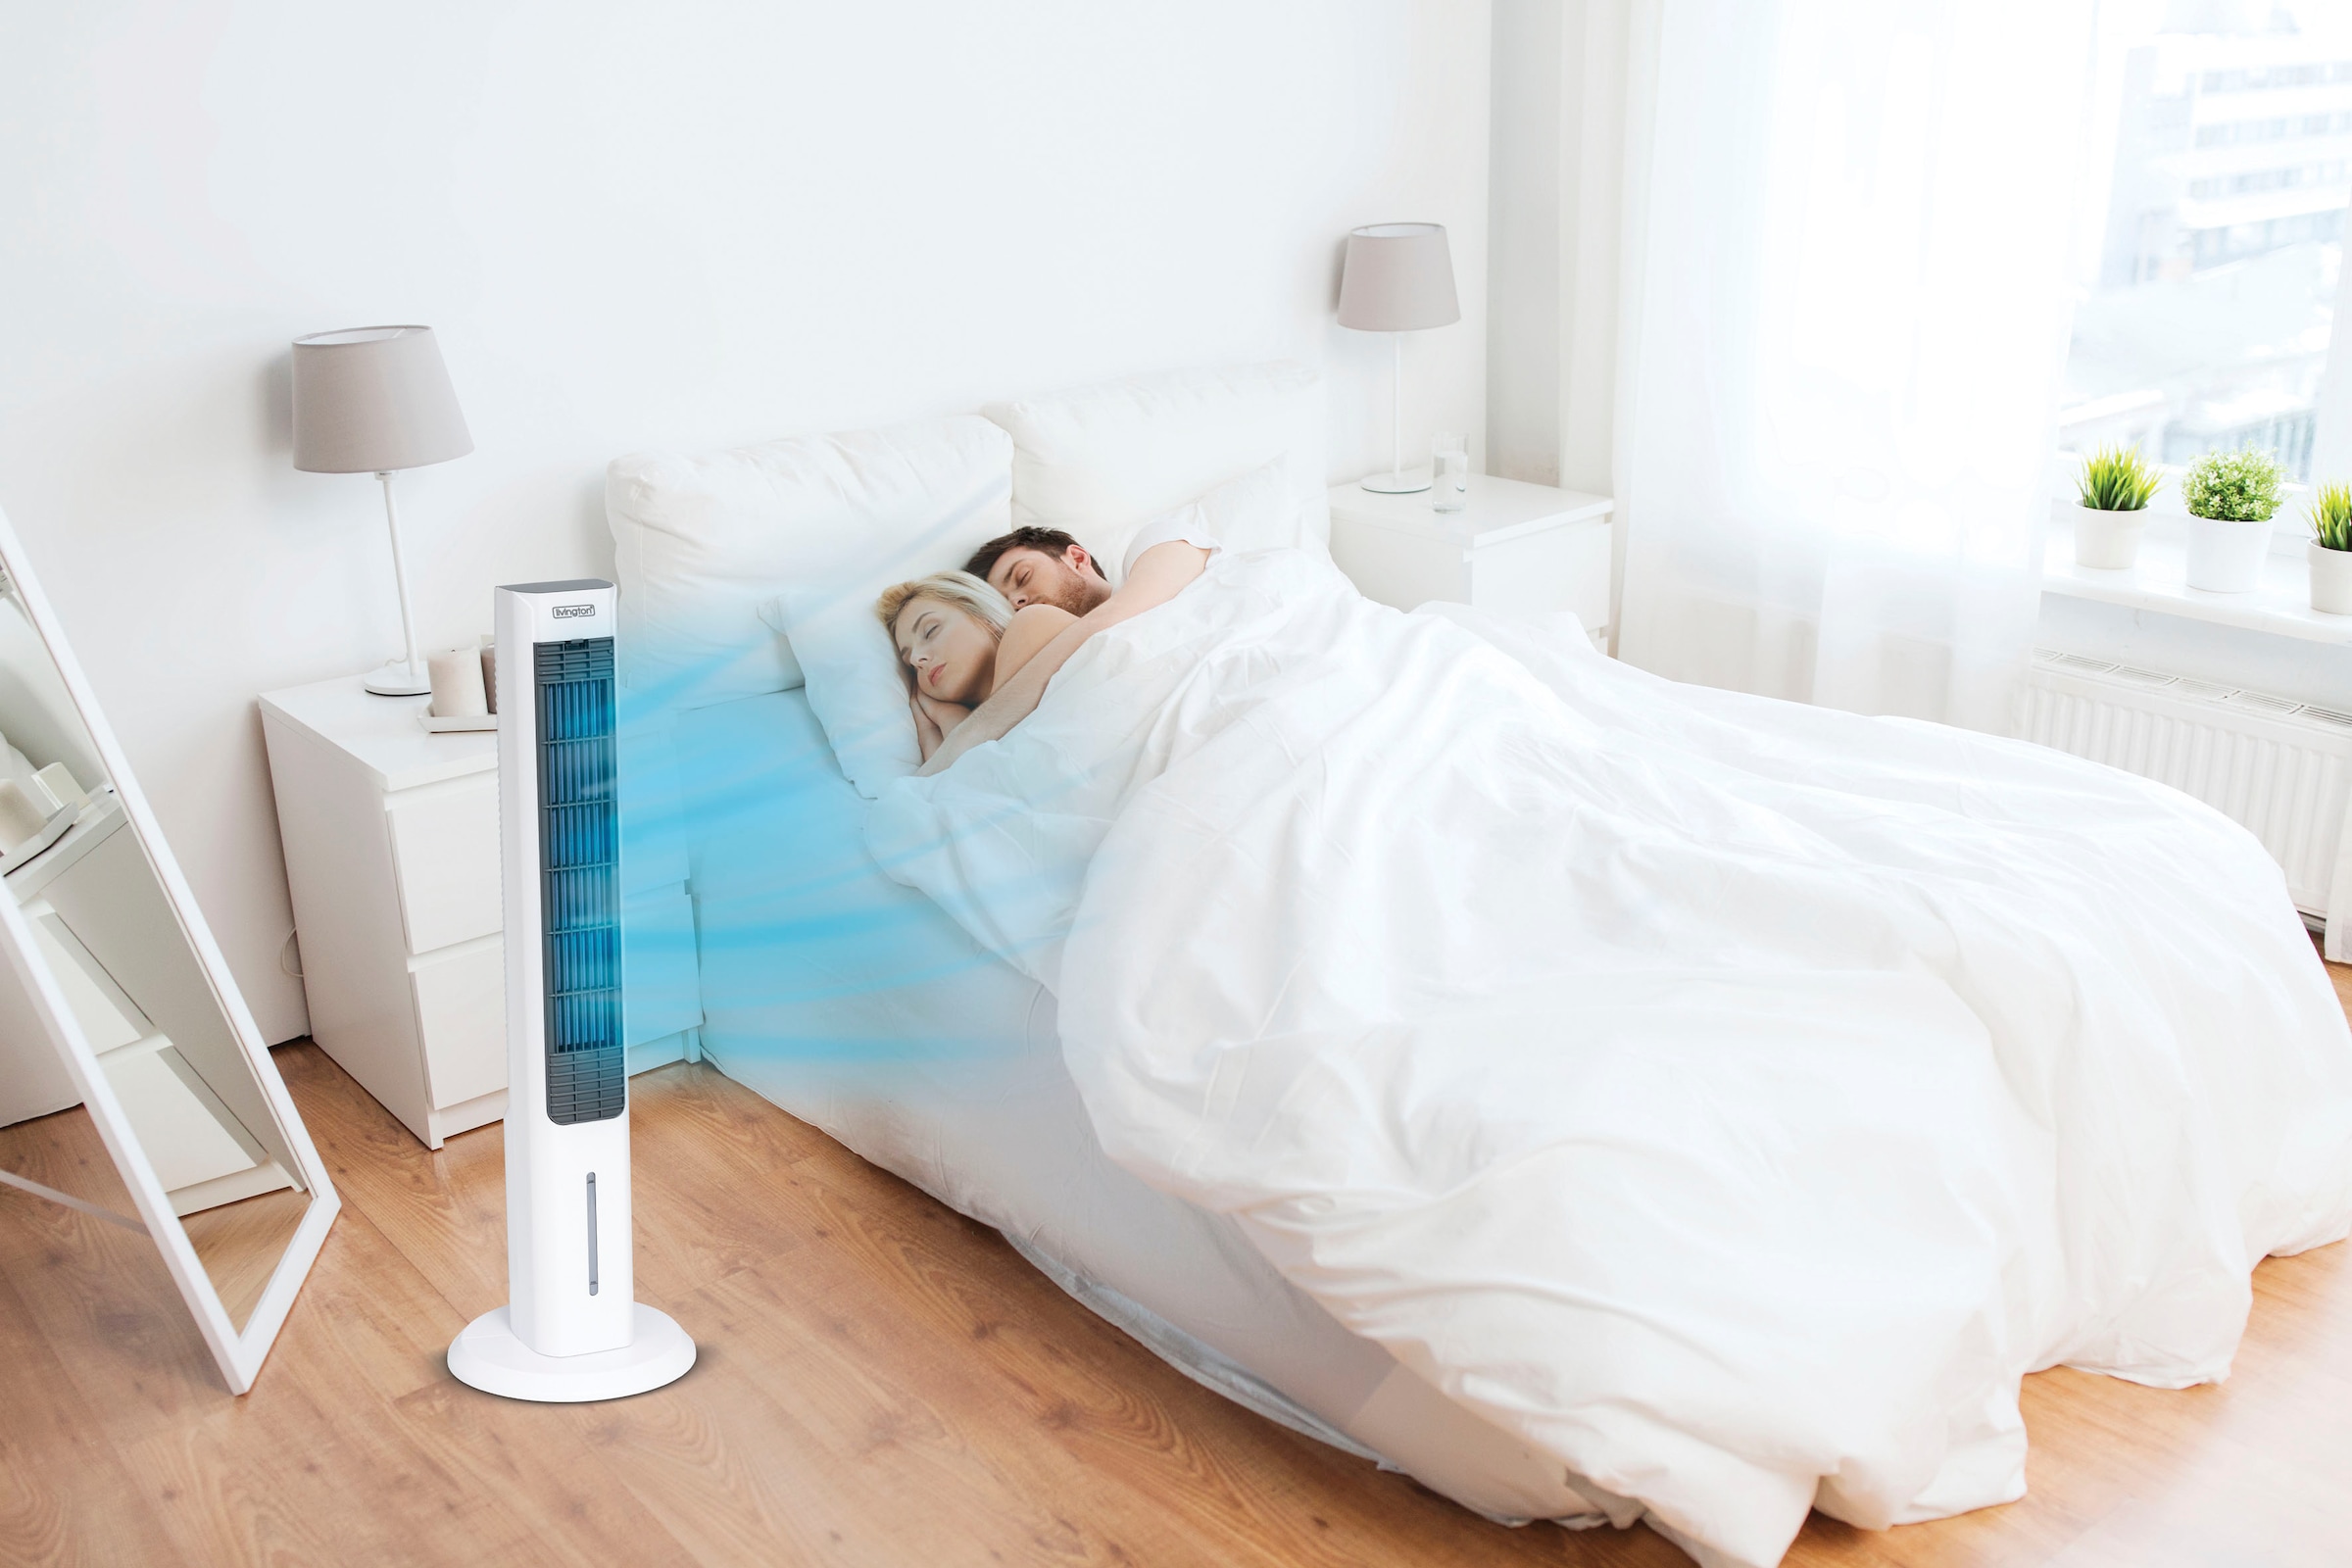 MediaShop Ventilatorkombigerät »ChillTower«, Luftkühler, 1,5 l Fassungsvermögen